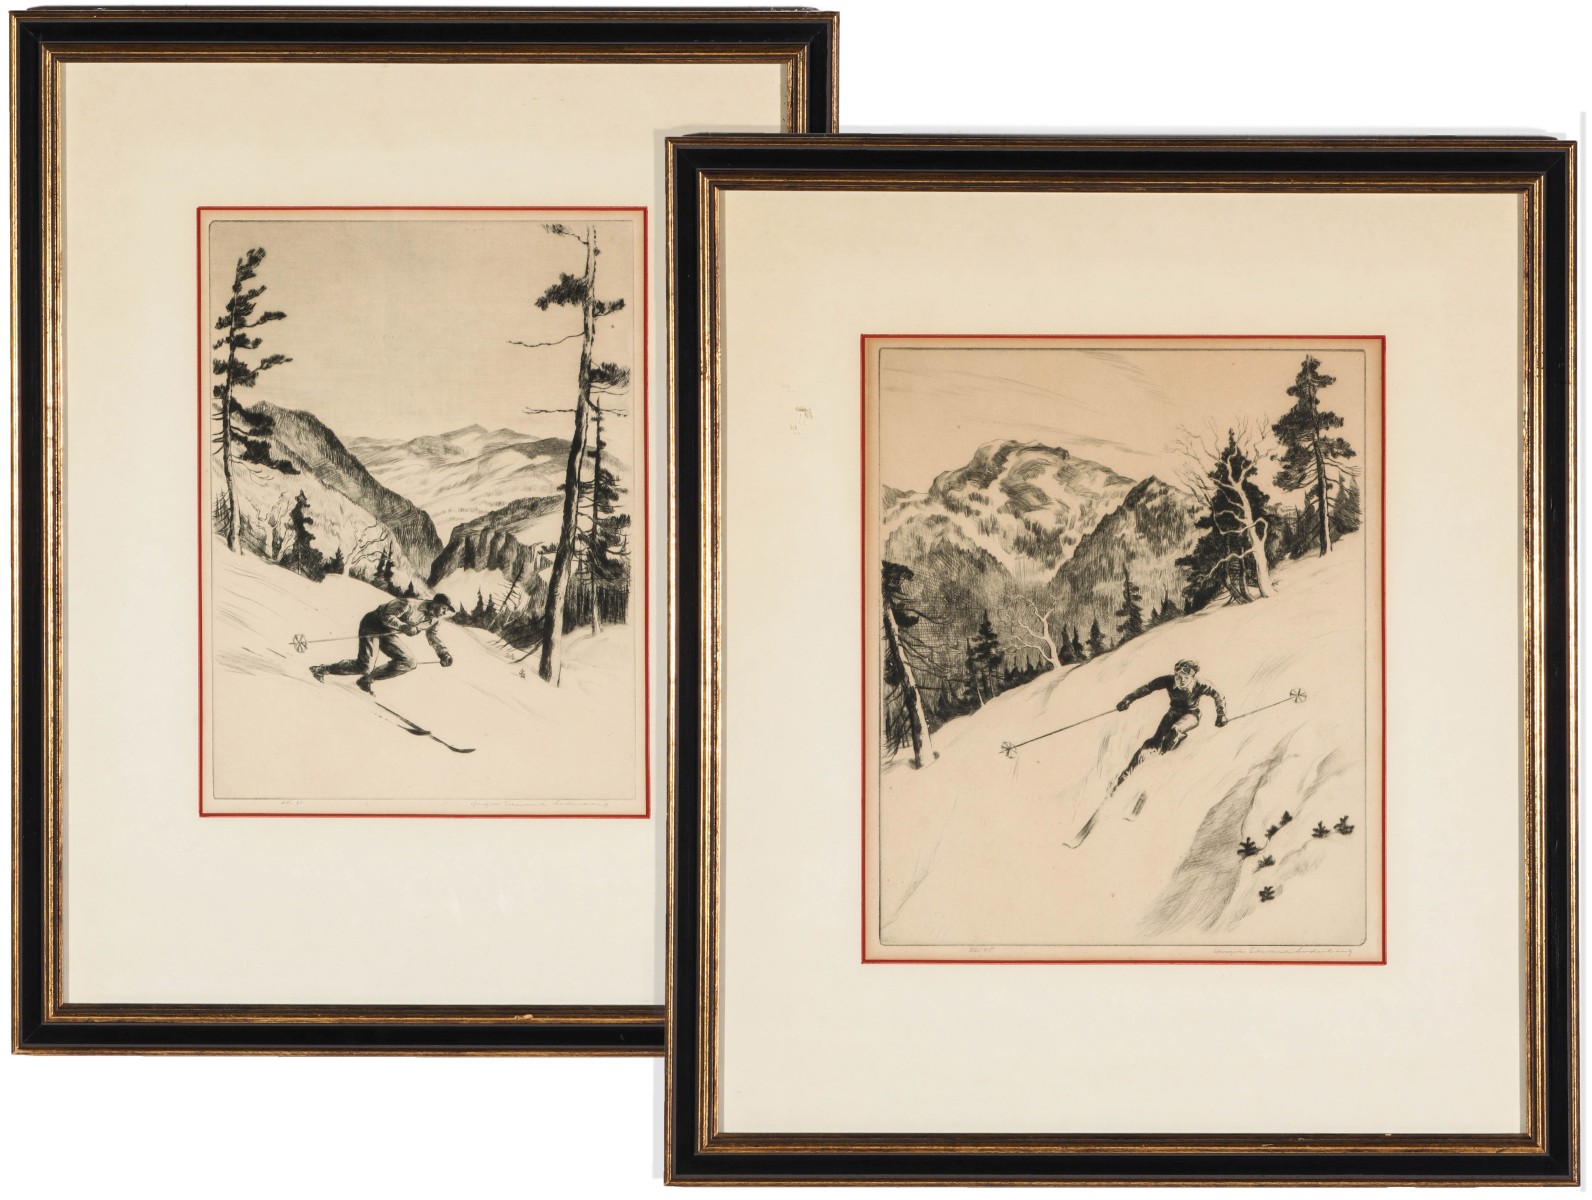 YNGVE EDWARD SODERBERG (1896-1971) SNOW SKIER ETCHNGS